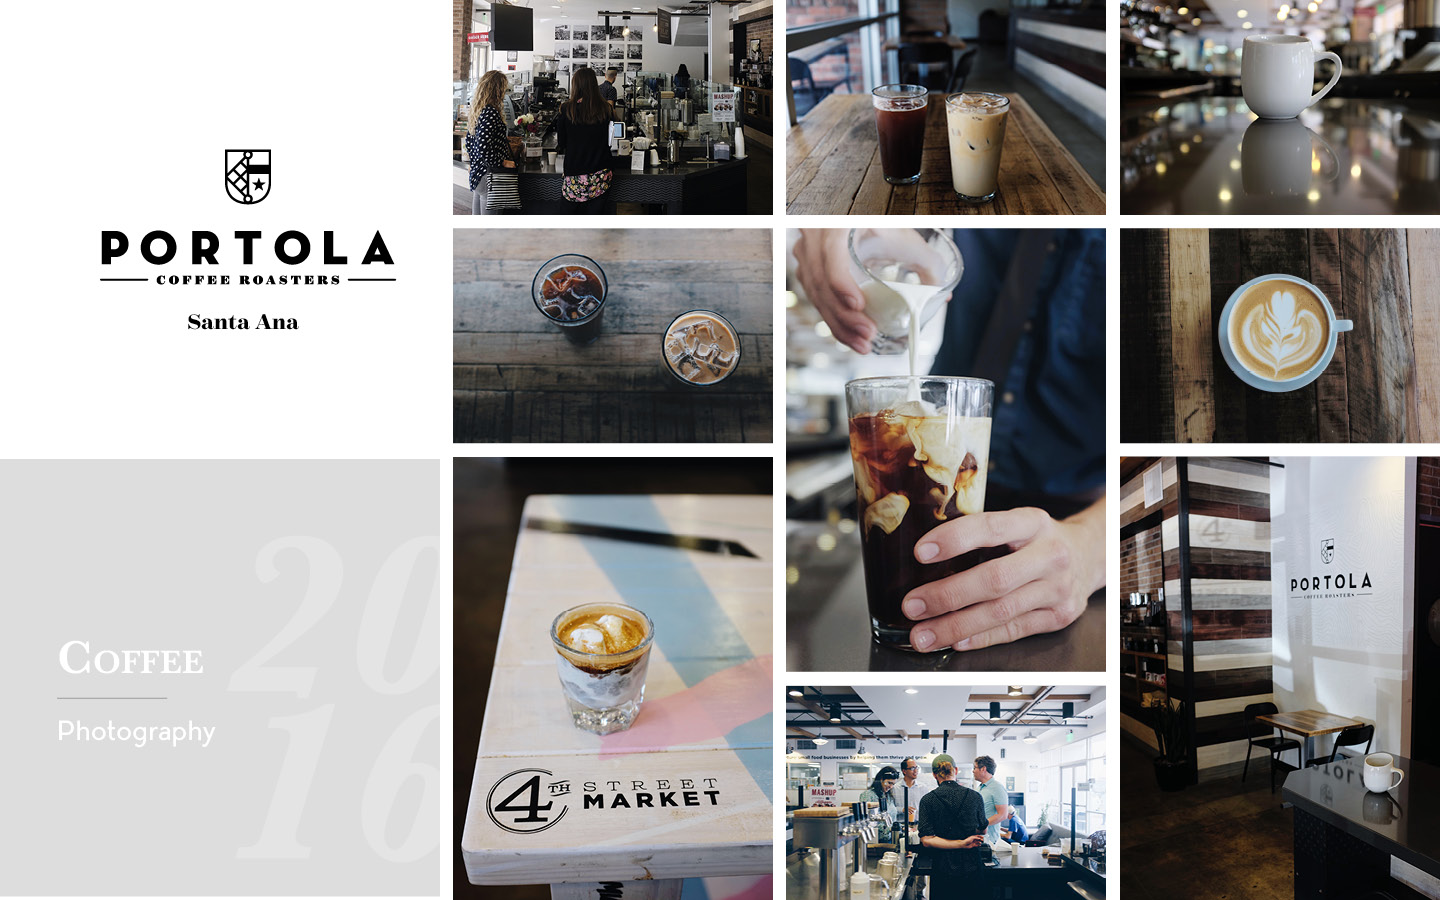 Patrick Hardy Design Social Media Photography - Portola Coffee Roasters Santa Ana, CA Coffee Photography